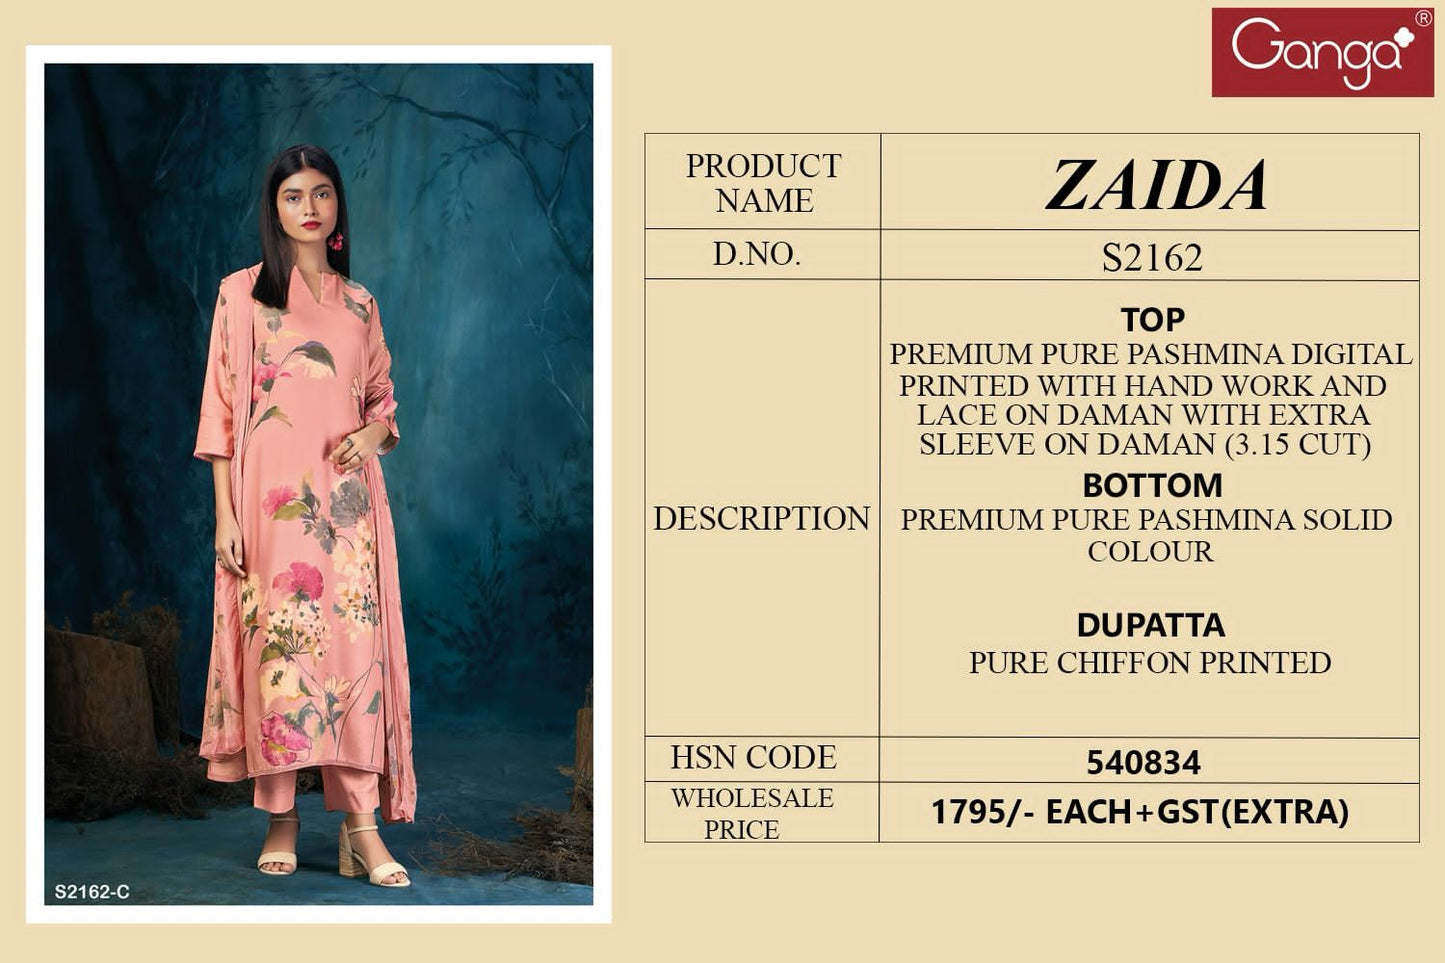 S2162-Abcd Zaida Ganga Pashmina Suits